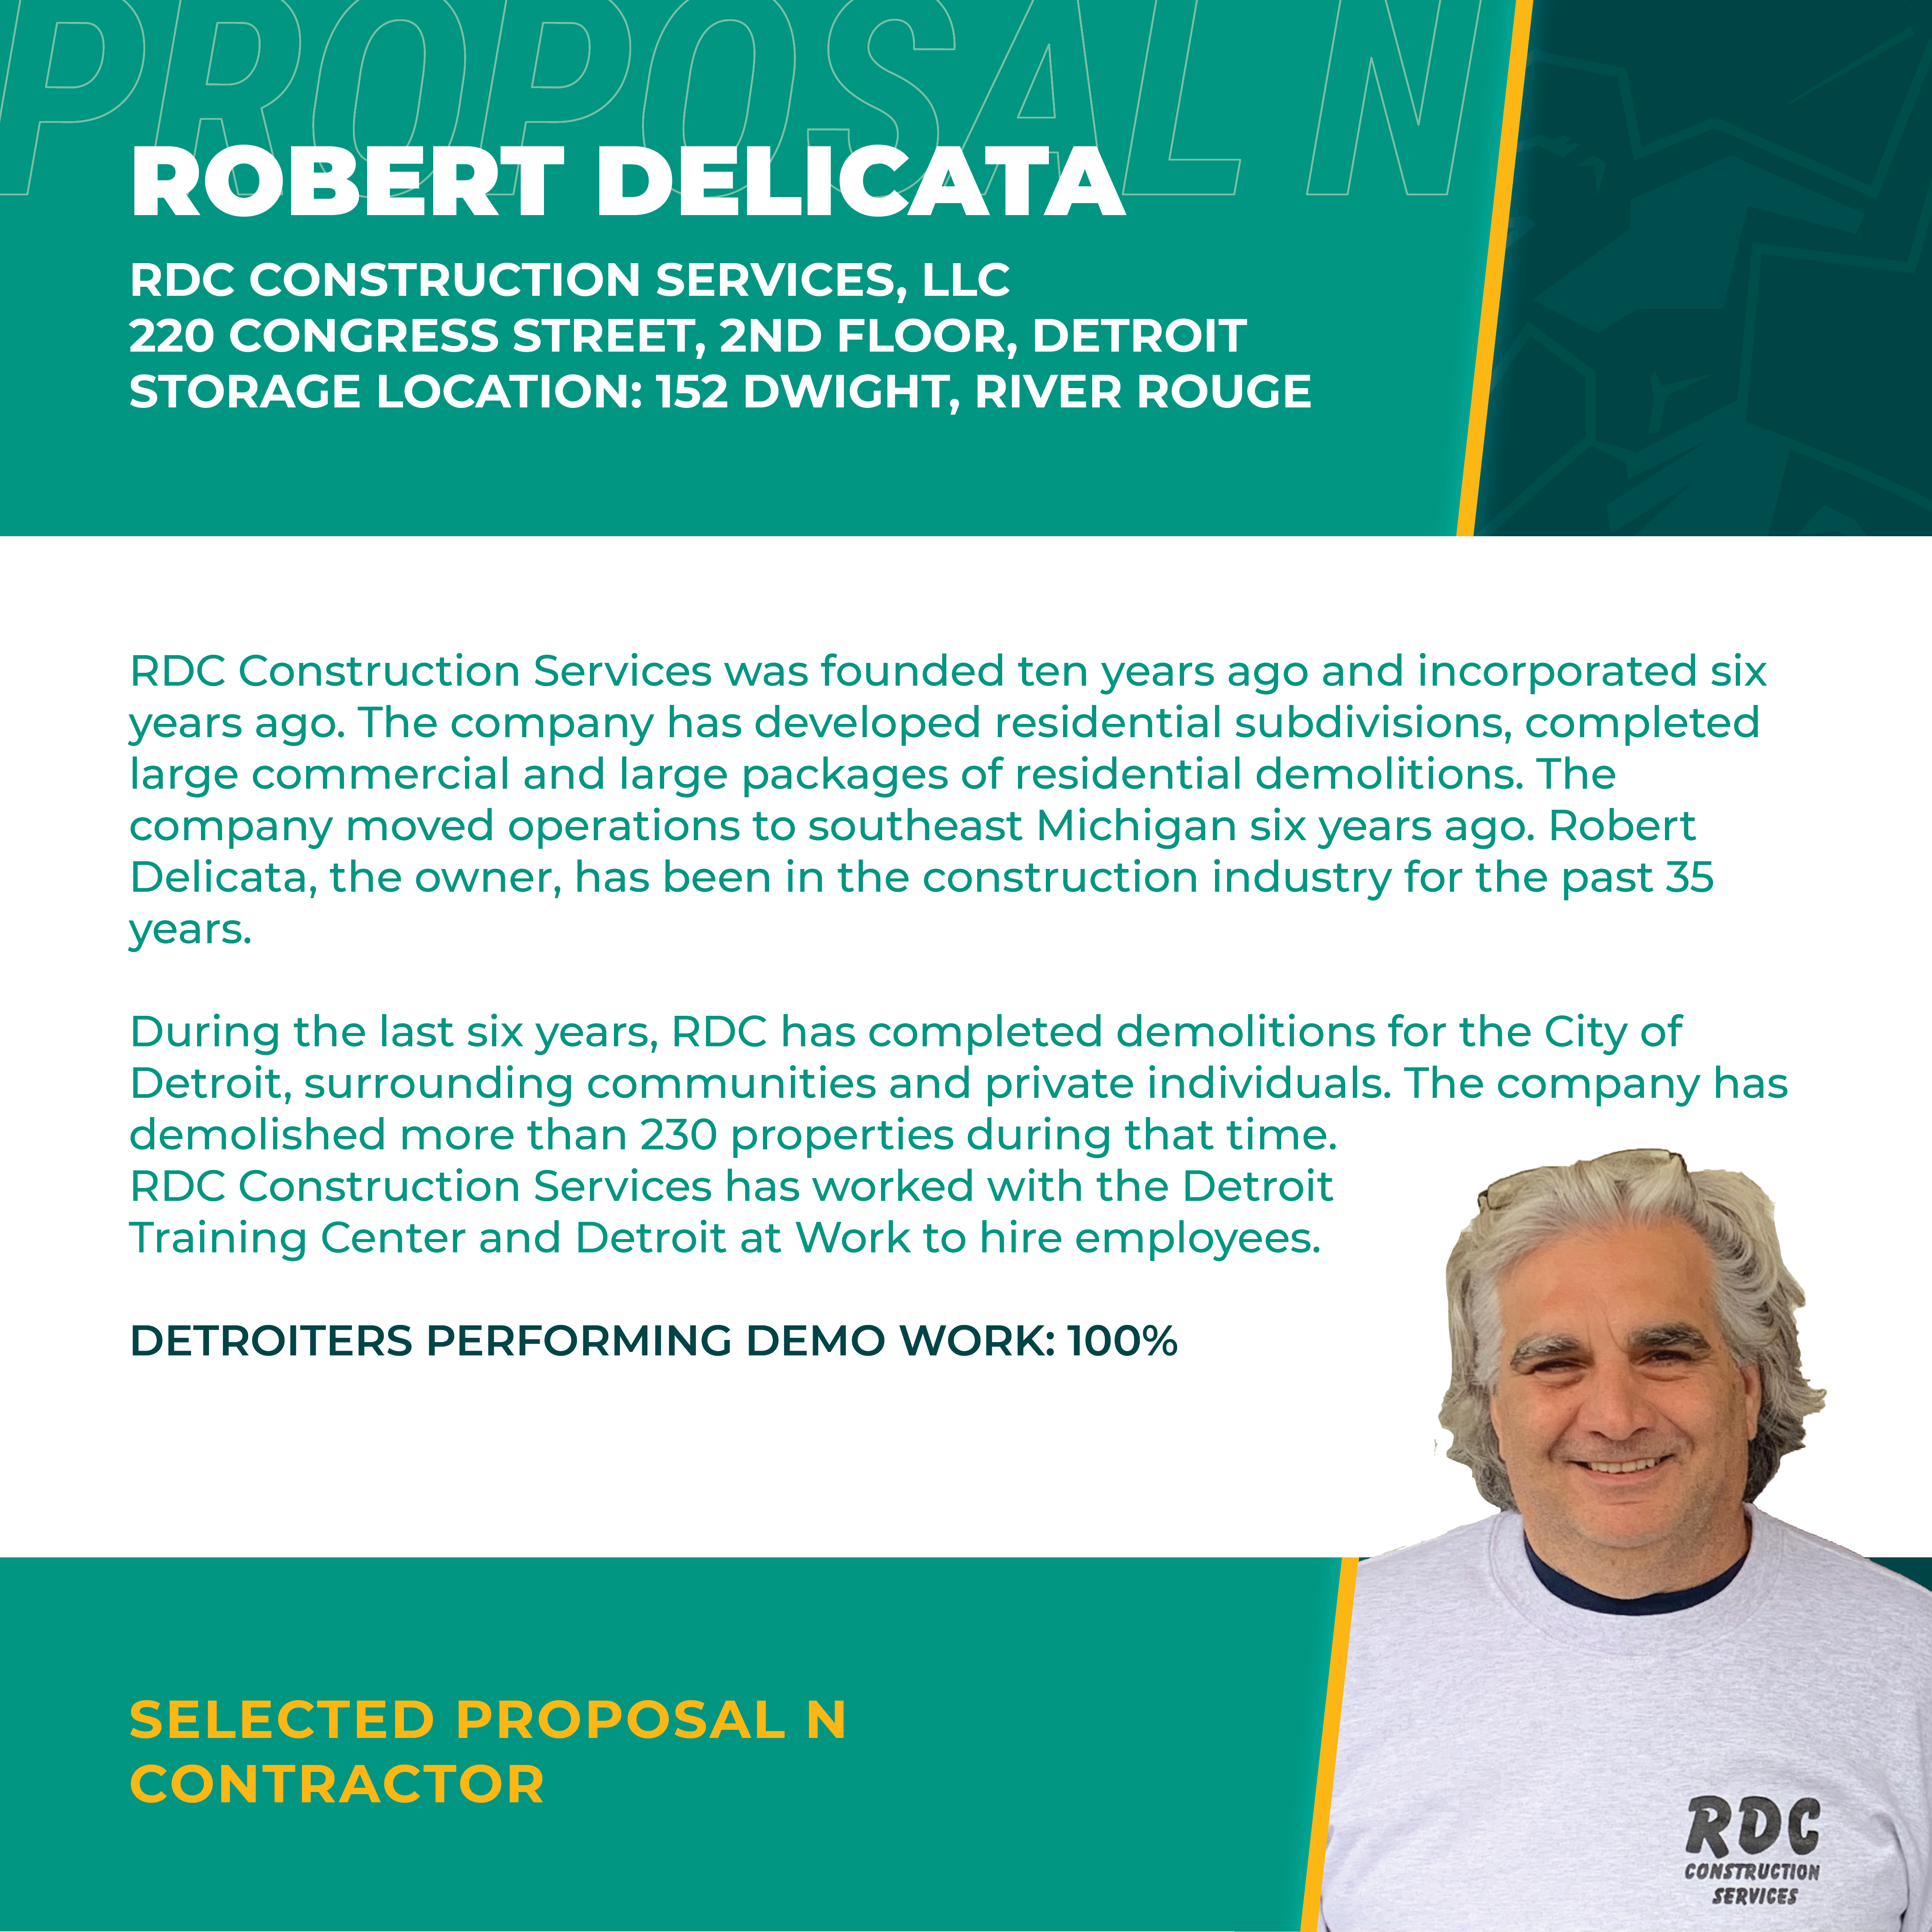 Proposal N - Robert Delicata